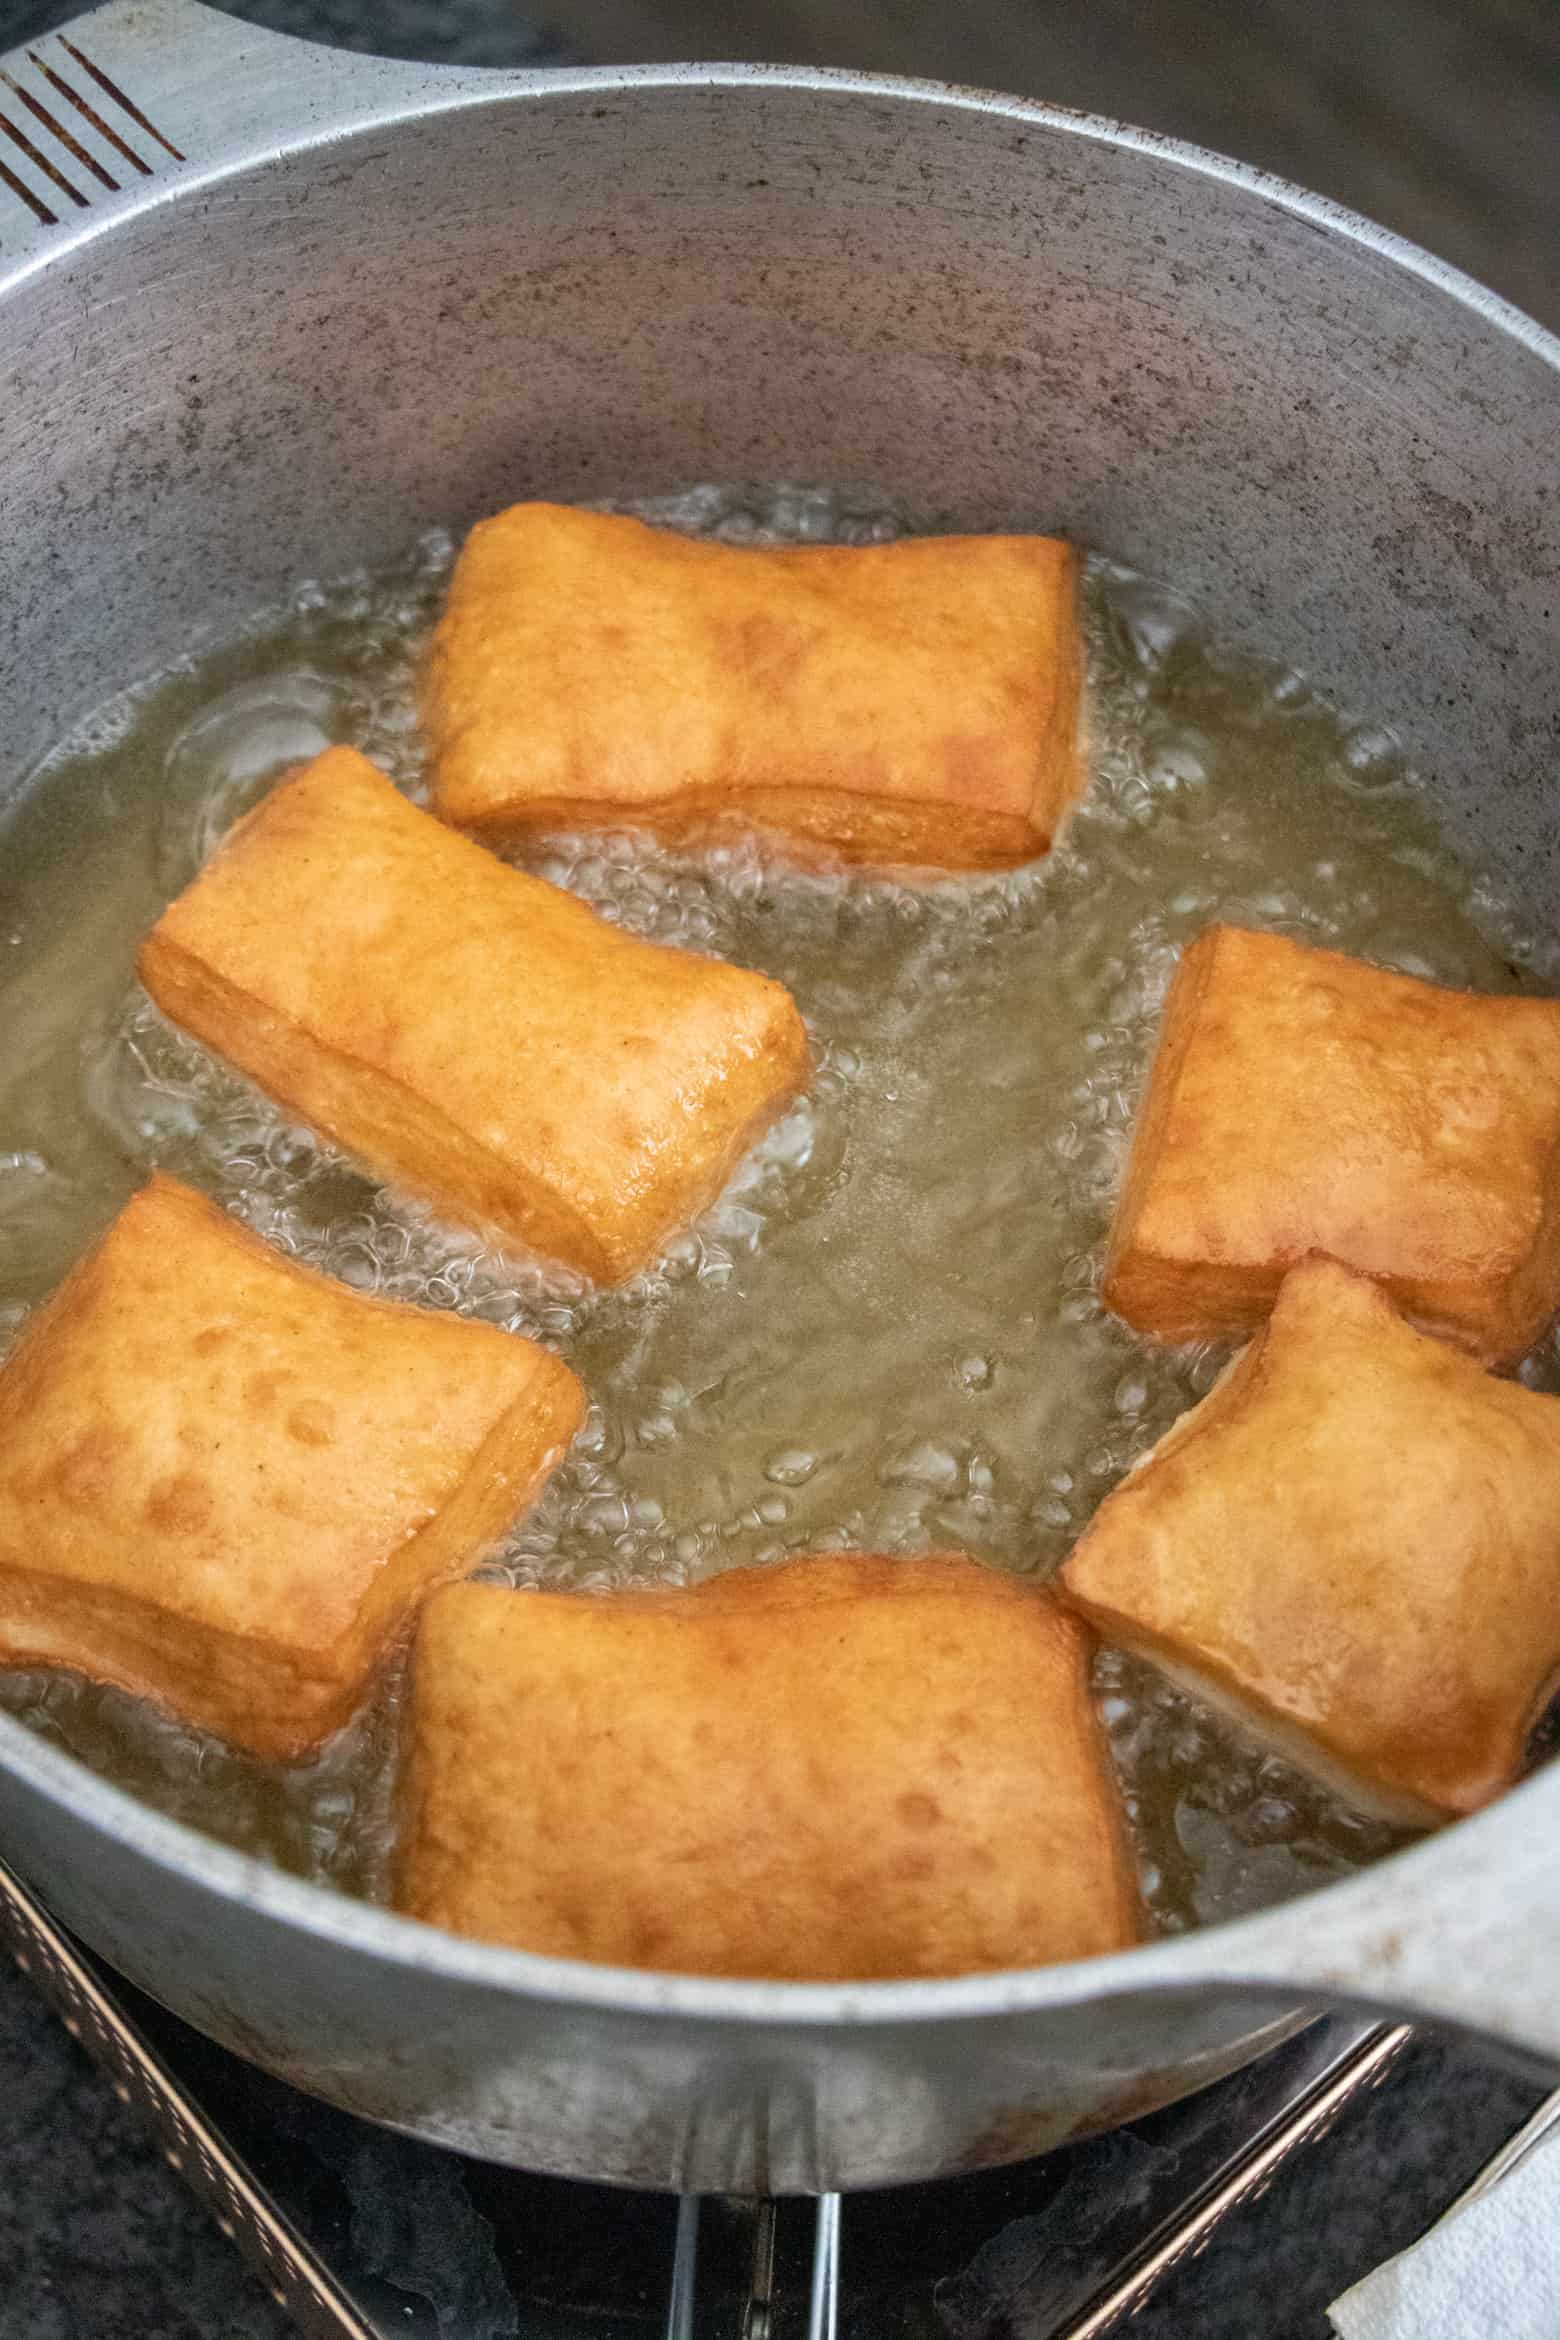 Beignets frying in a pot of oil.